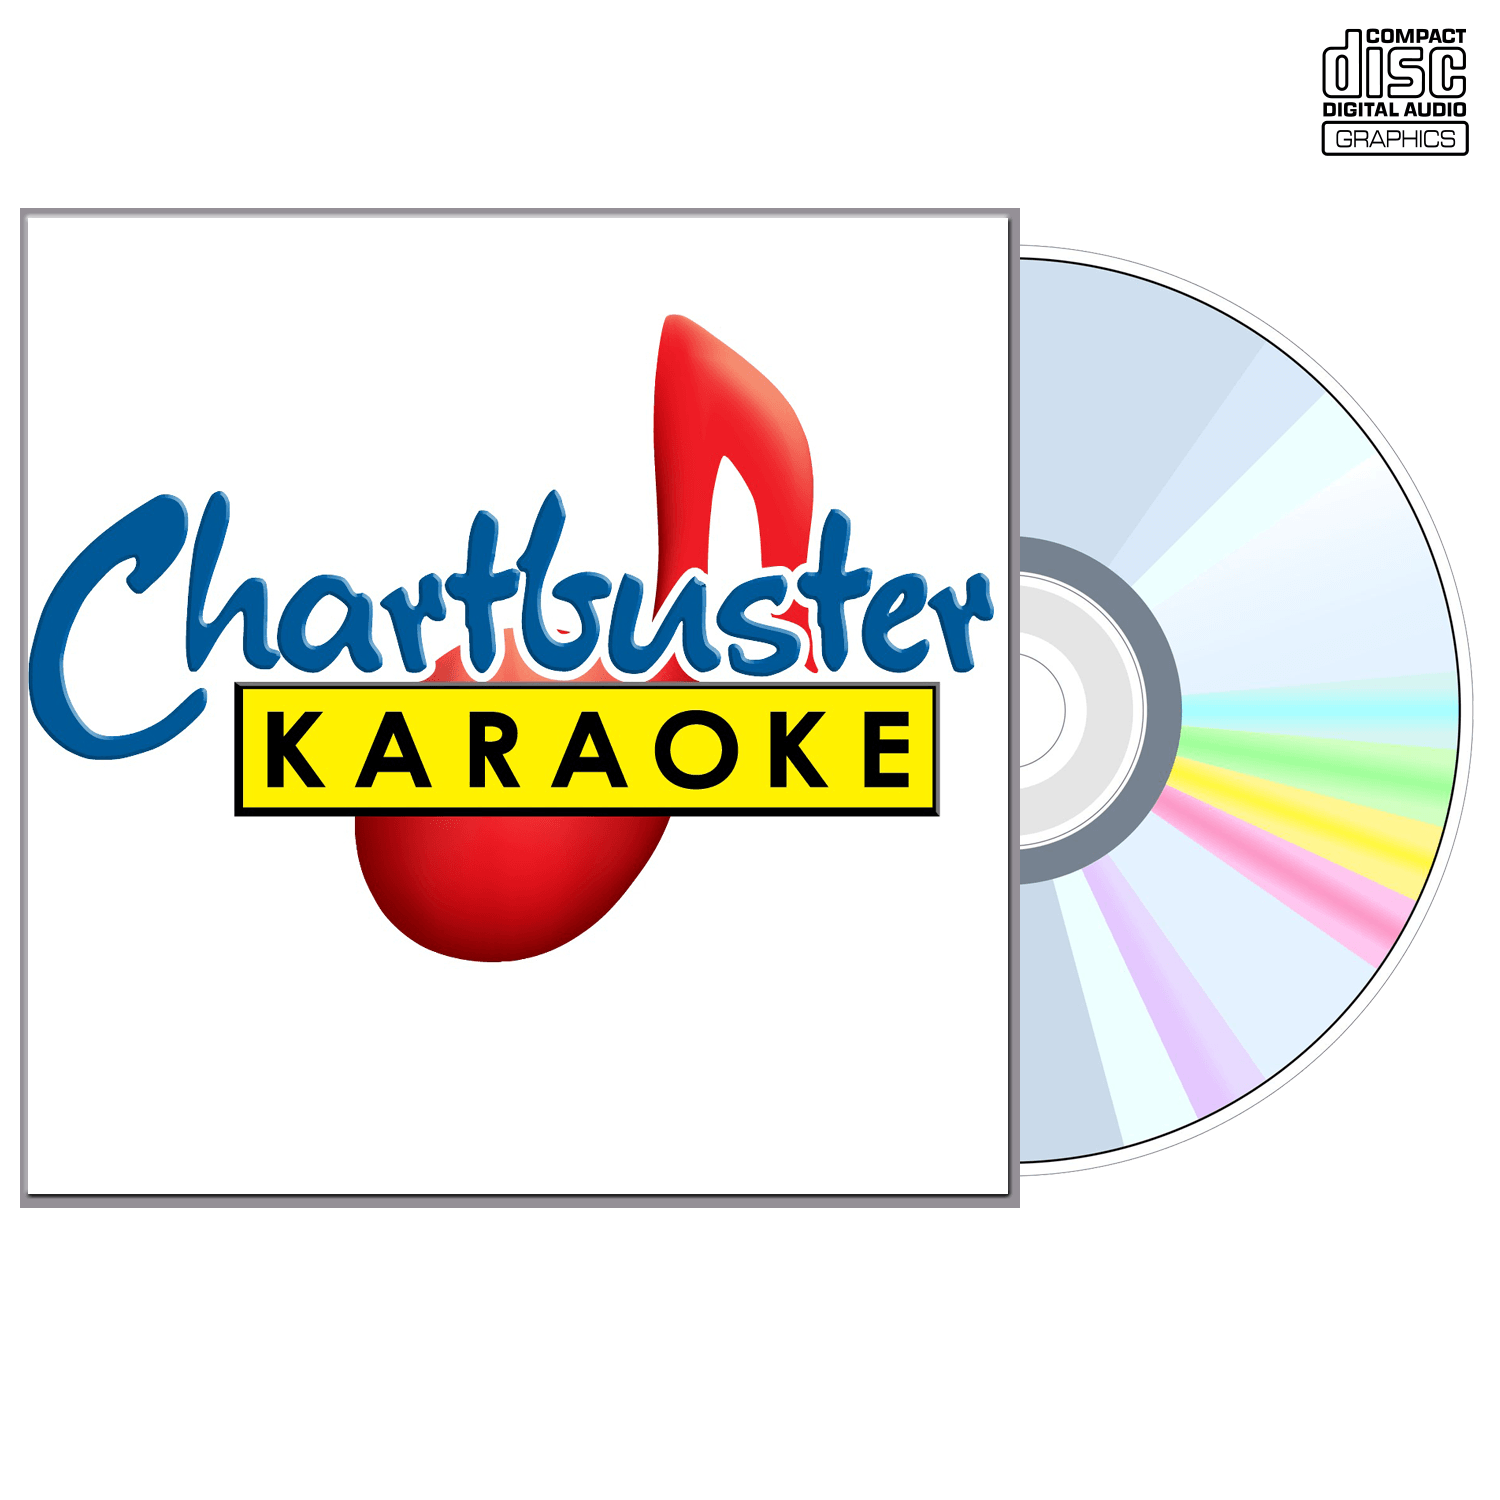 Crystal Gayle - CD+G - Chartbuster Karaoke - Karaoke Home Entertainment